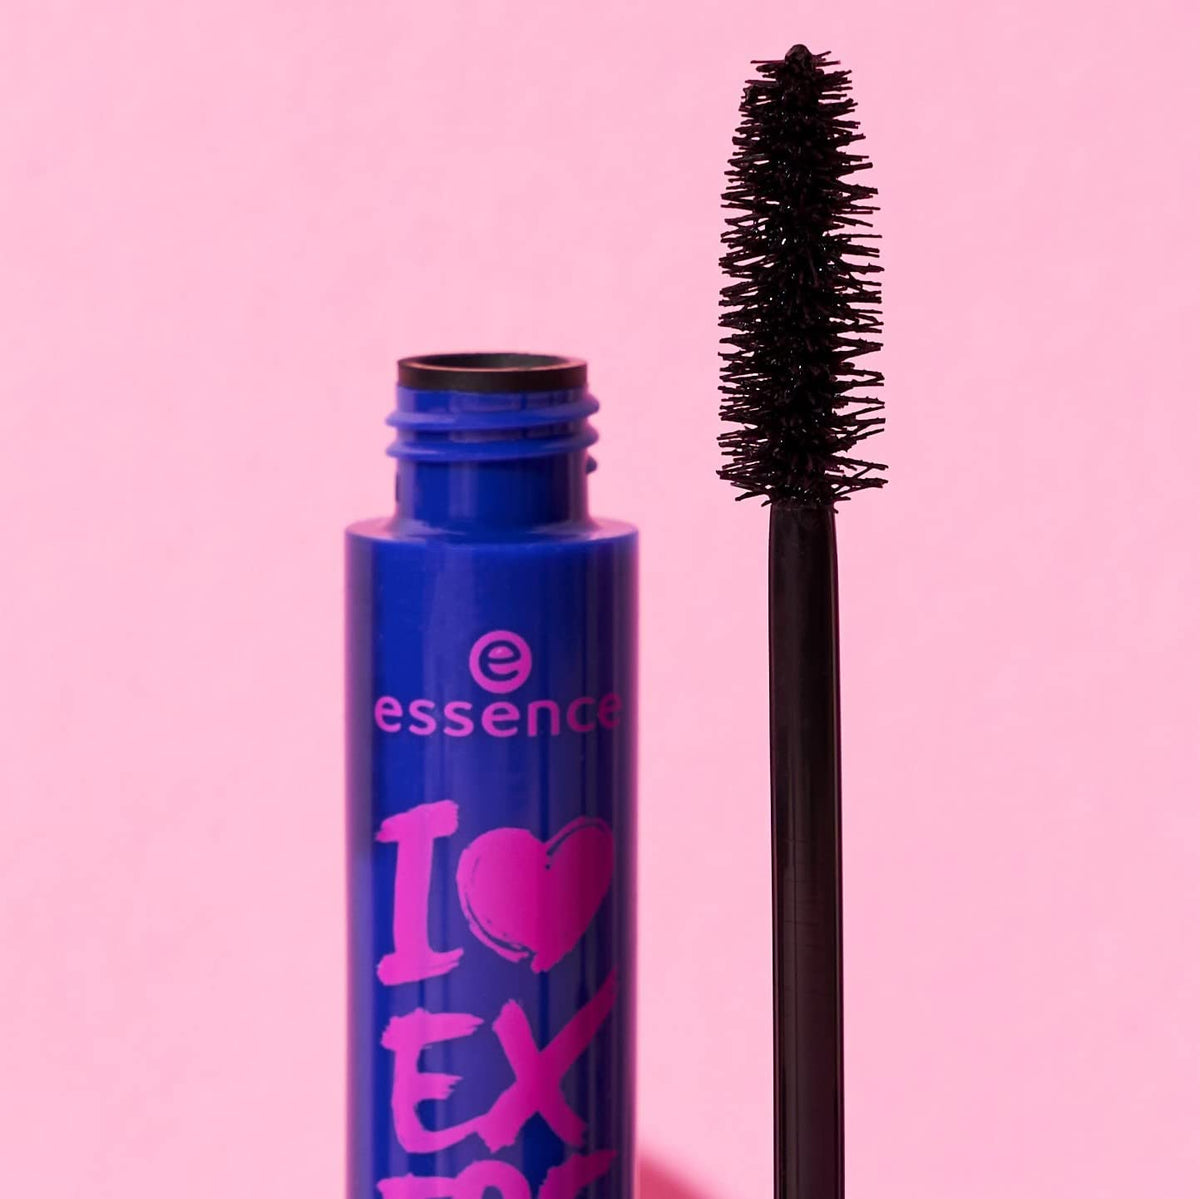 Essence I love Extreme Volume Mascara Waterproof - Black